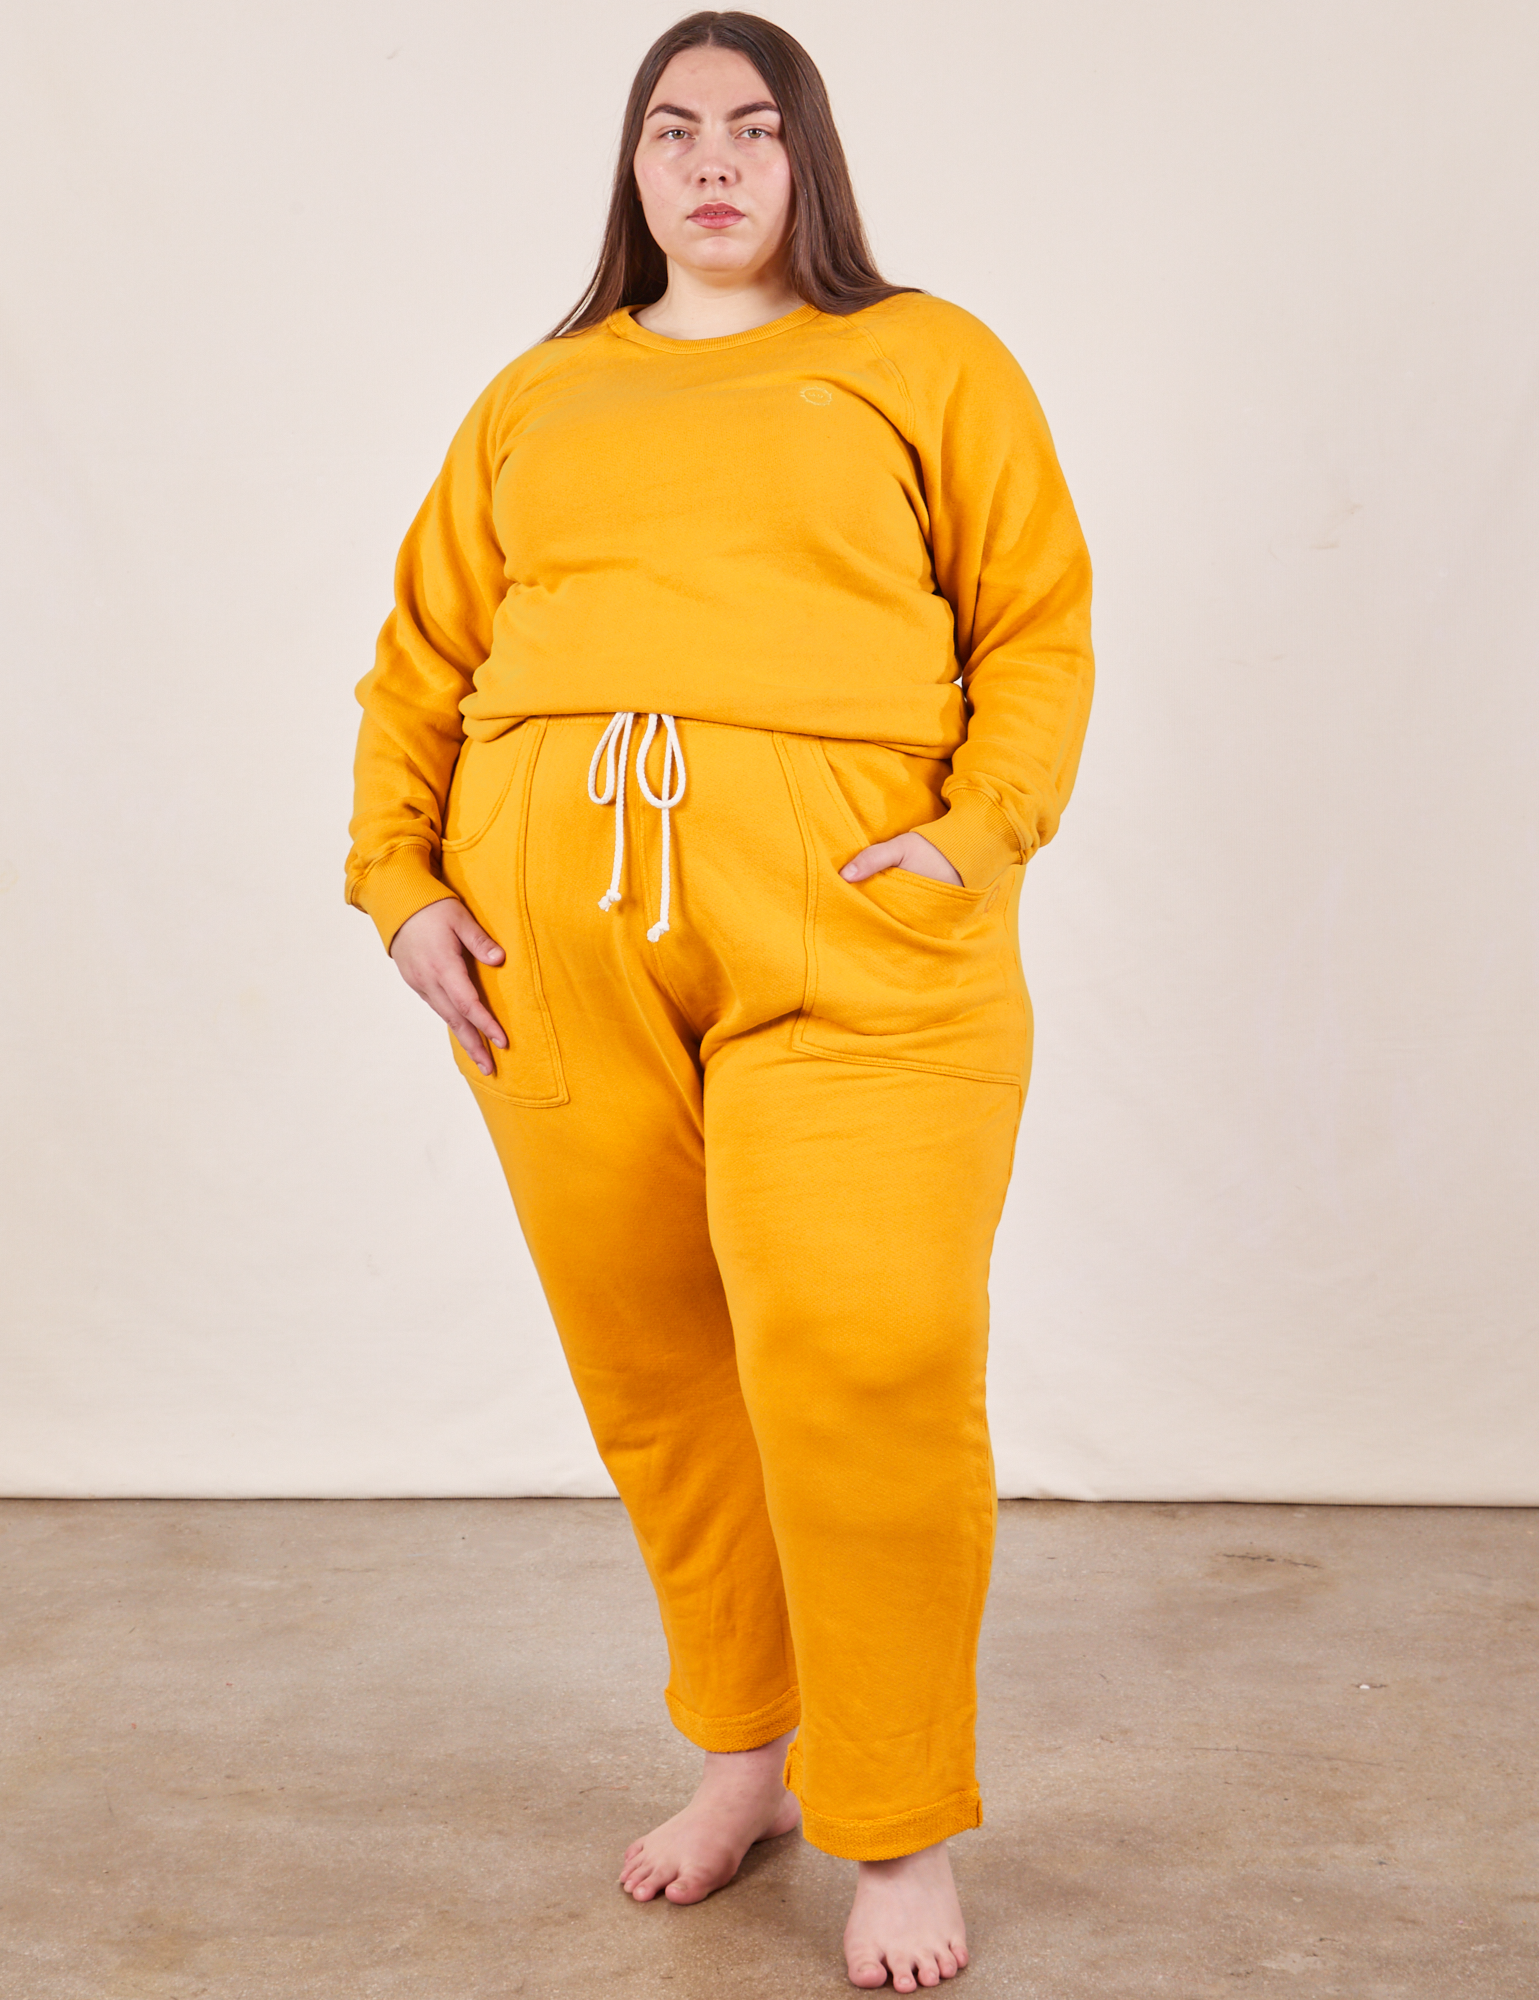 Marielena is wearing Cropped Rolled Cuff Sweatpants in Mustard Yellow and matching Heavyweight Crew Sweatshirt